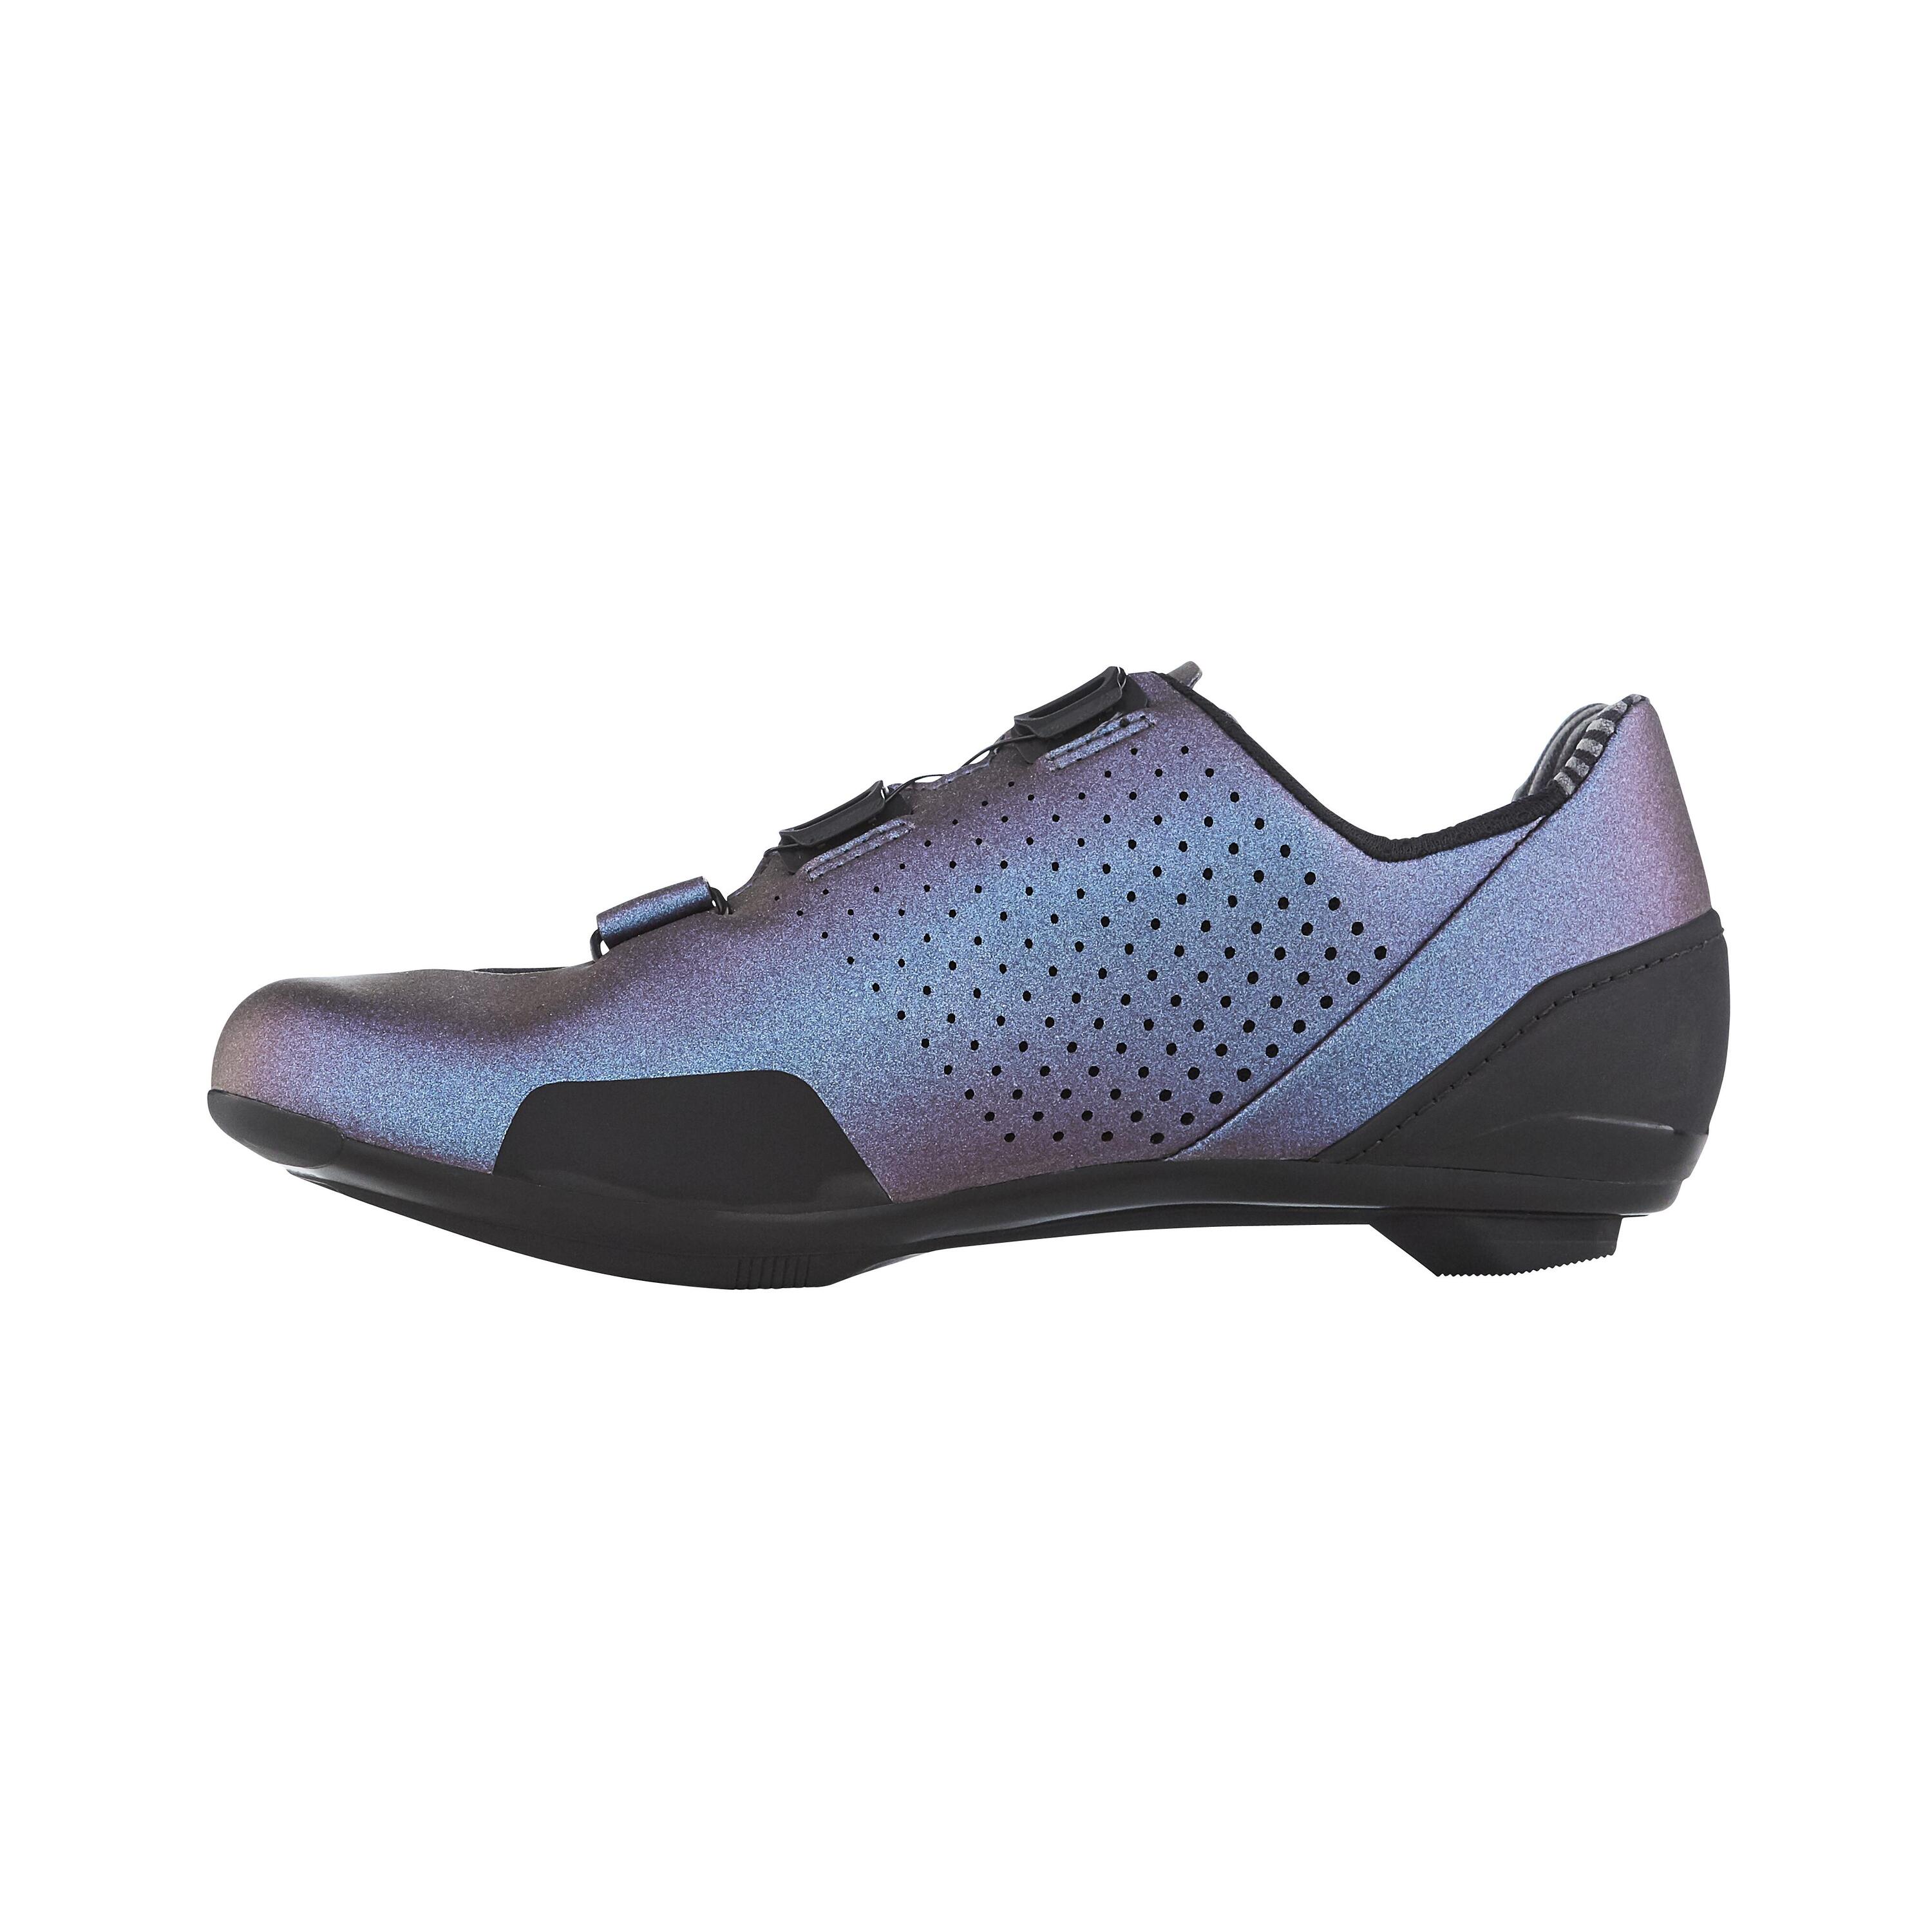 RoadR 520 Women's Carbon Road Cycling Shoes - Iridescent Purple 3/6